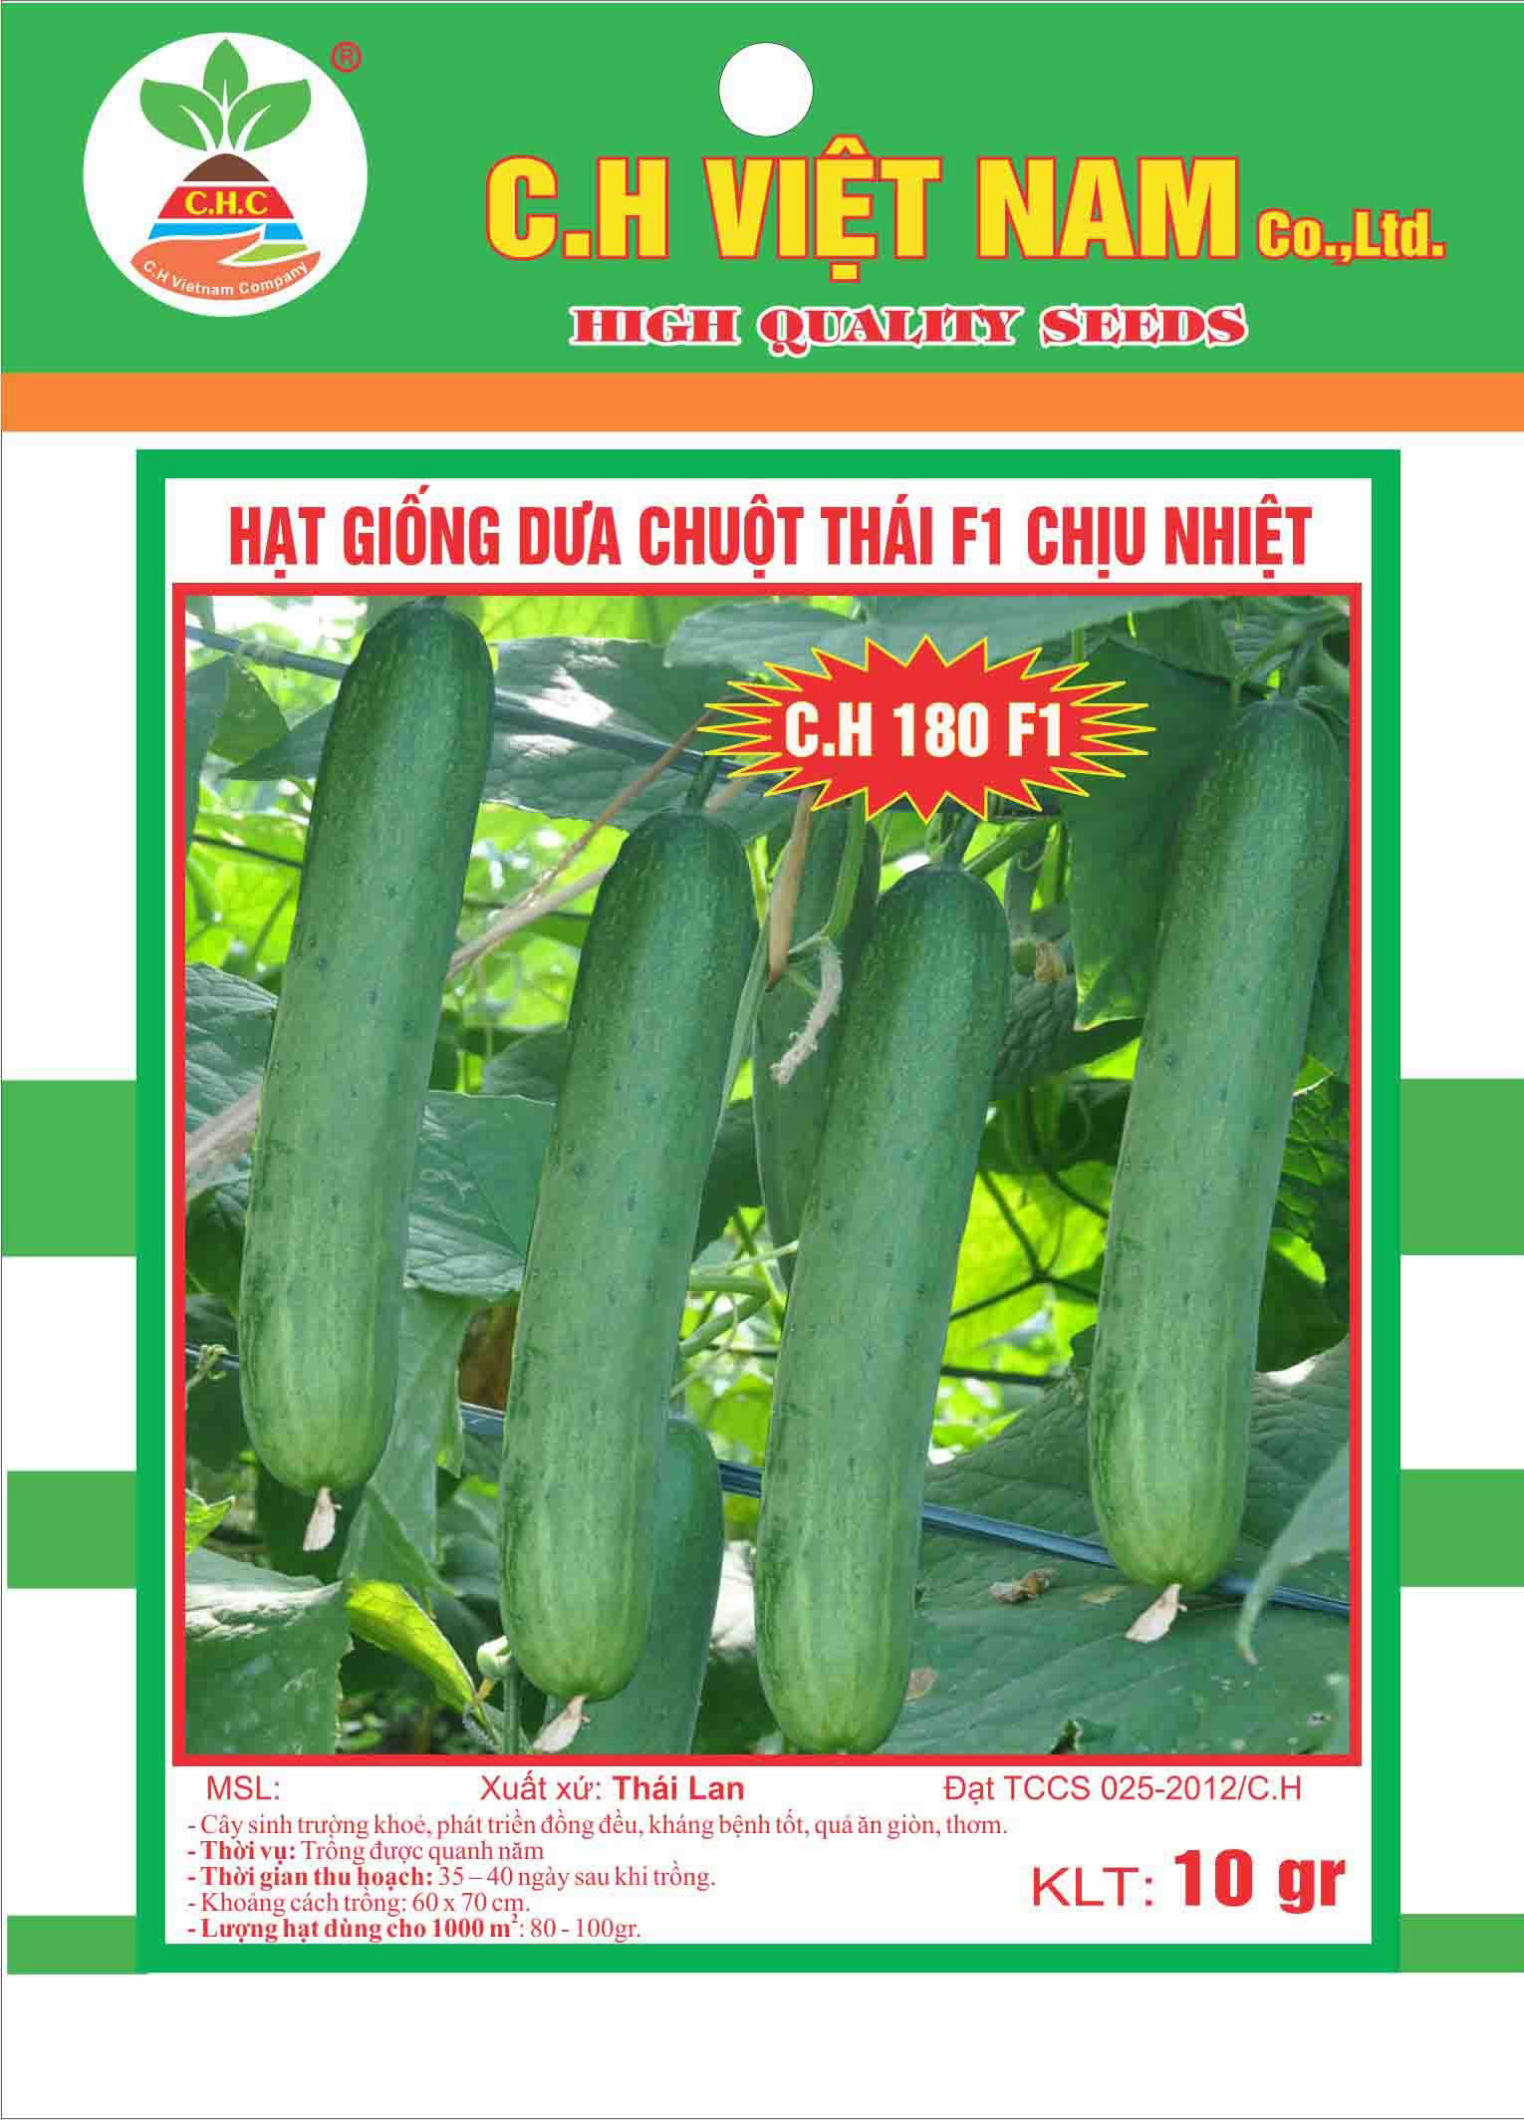 Heat-resistant Thai cucumber seeds